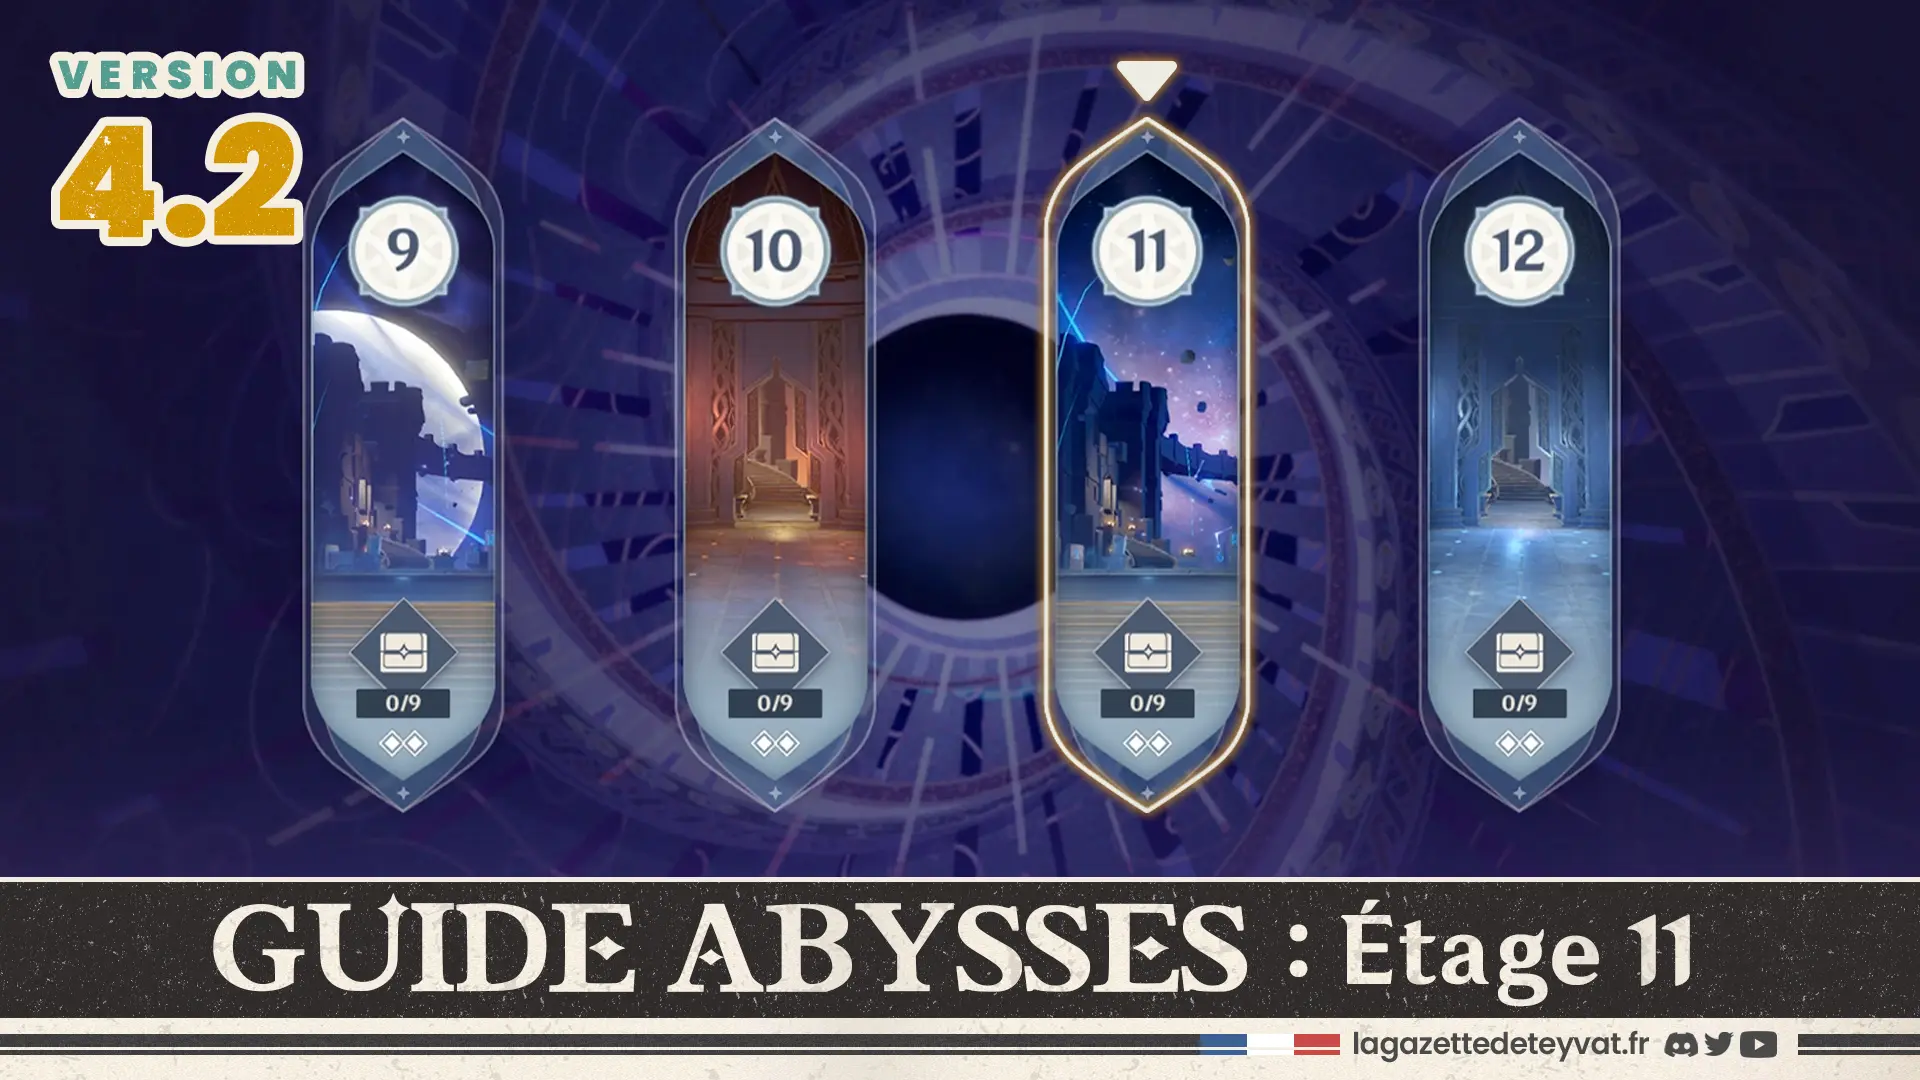 Abysses 4.2 étage 11